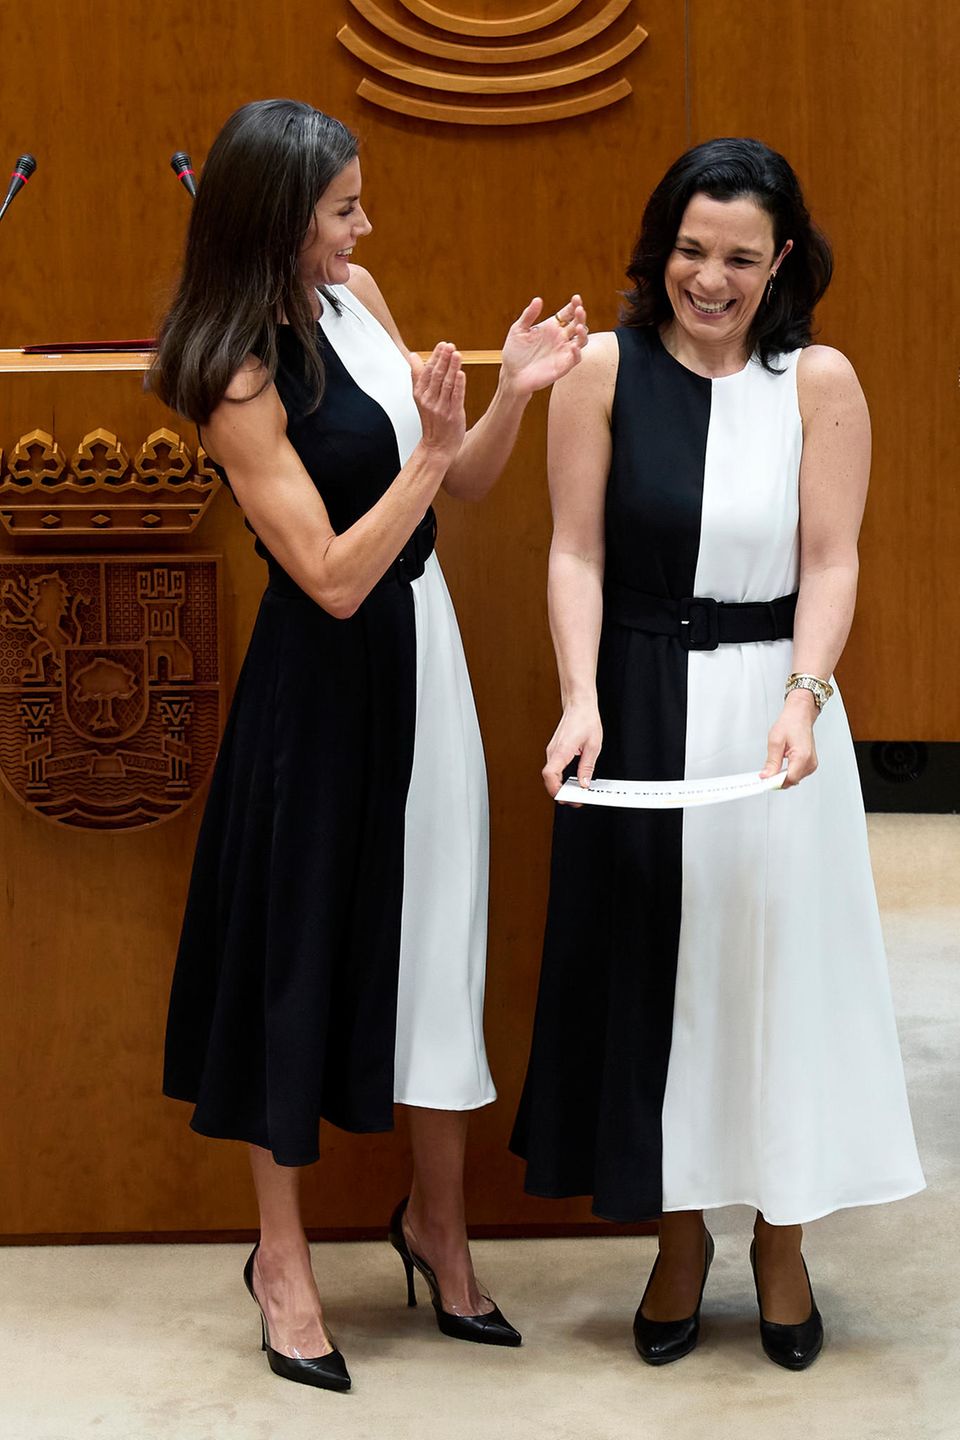 Fashion twins Queen Letizia and law professor Inmaculada Vivas on the "Queen Letizia Award" in May 2022